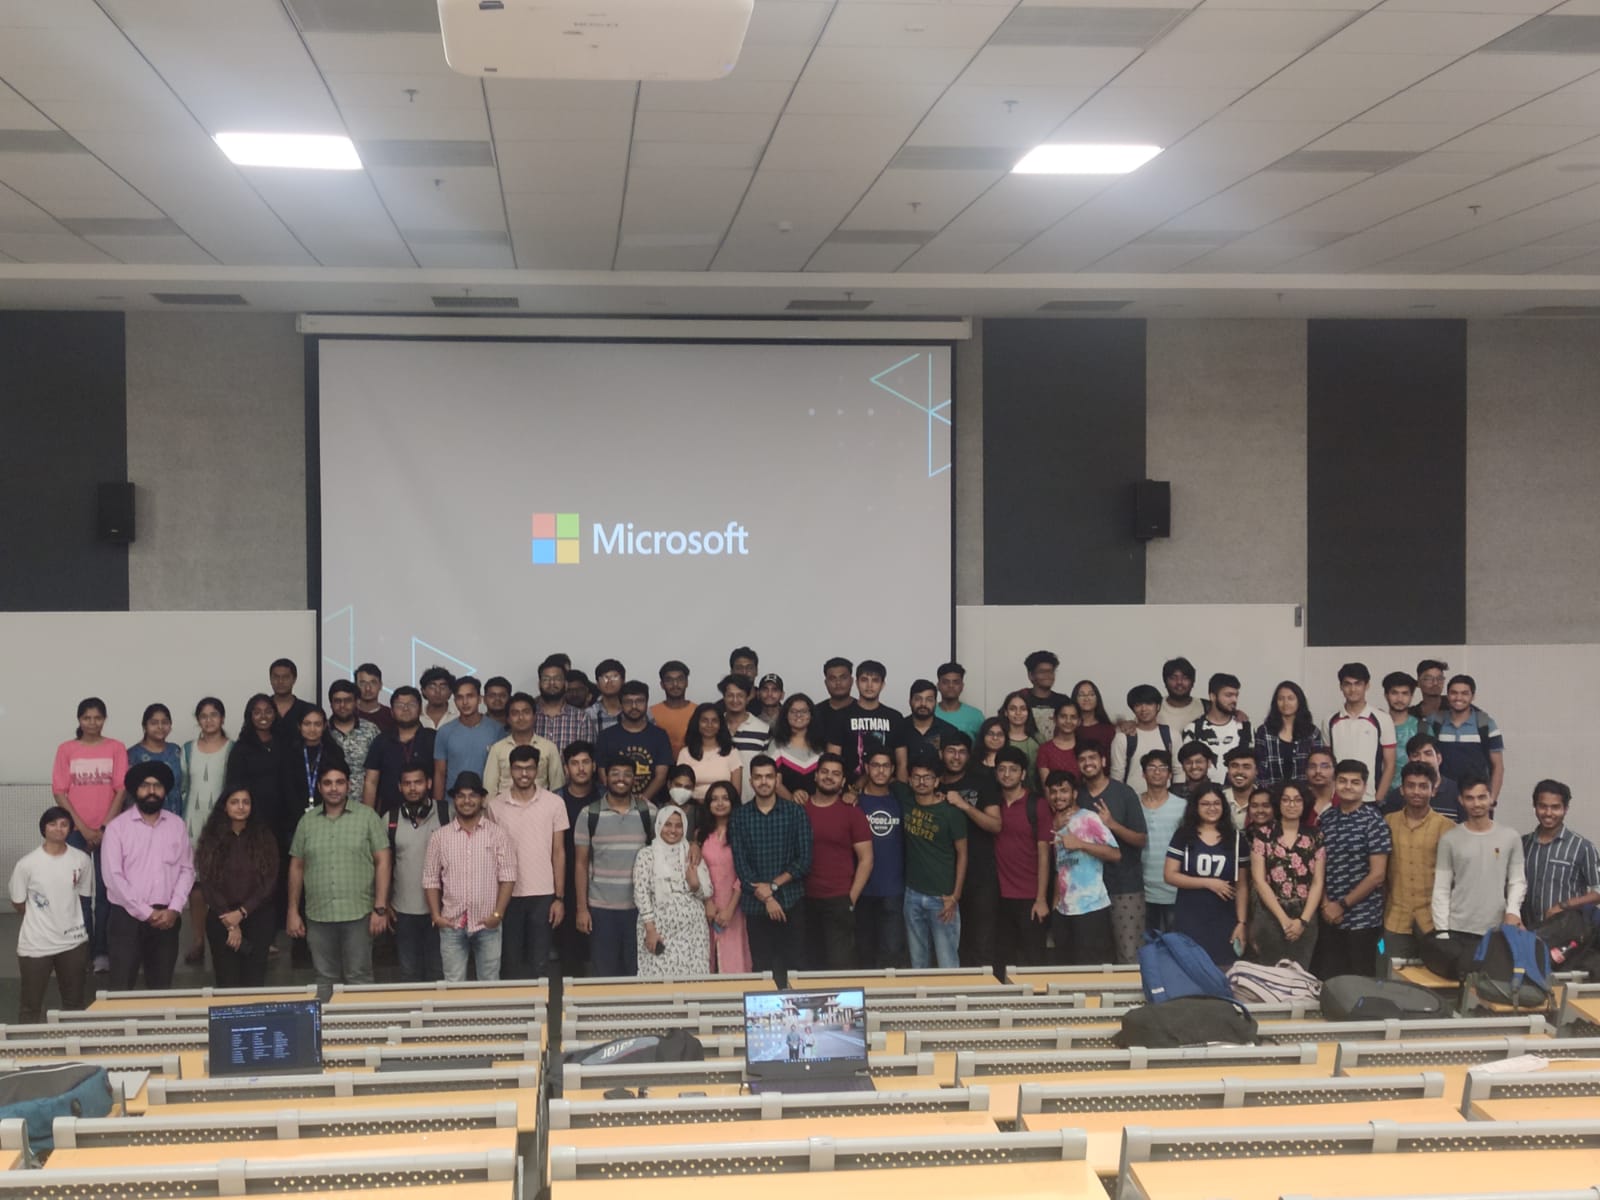 MIcrosoft Event @ Bennett University, Greater Noida, India